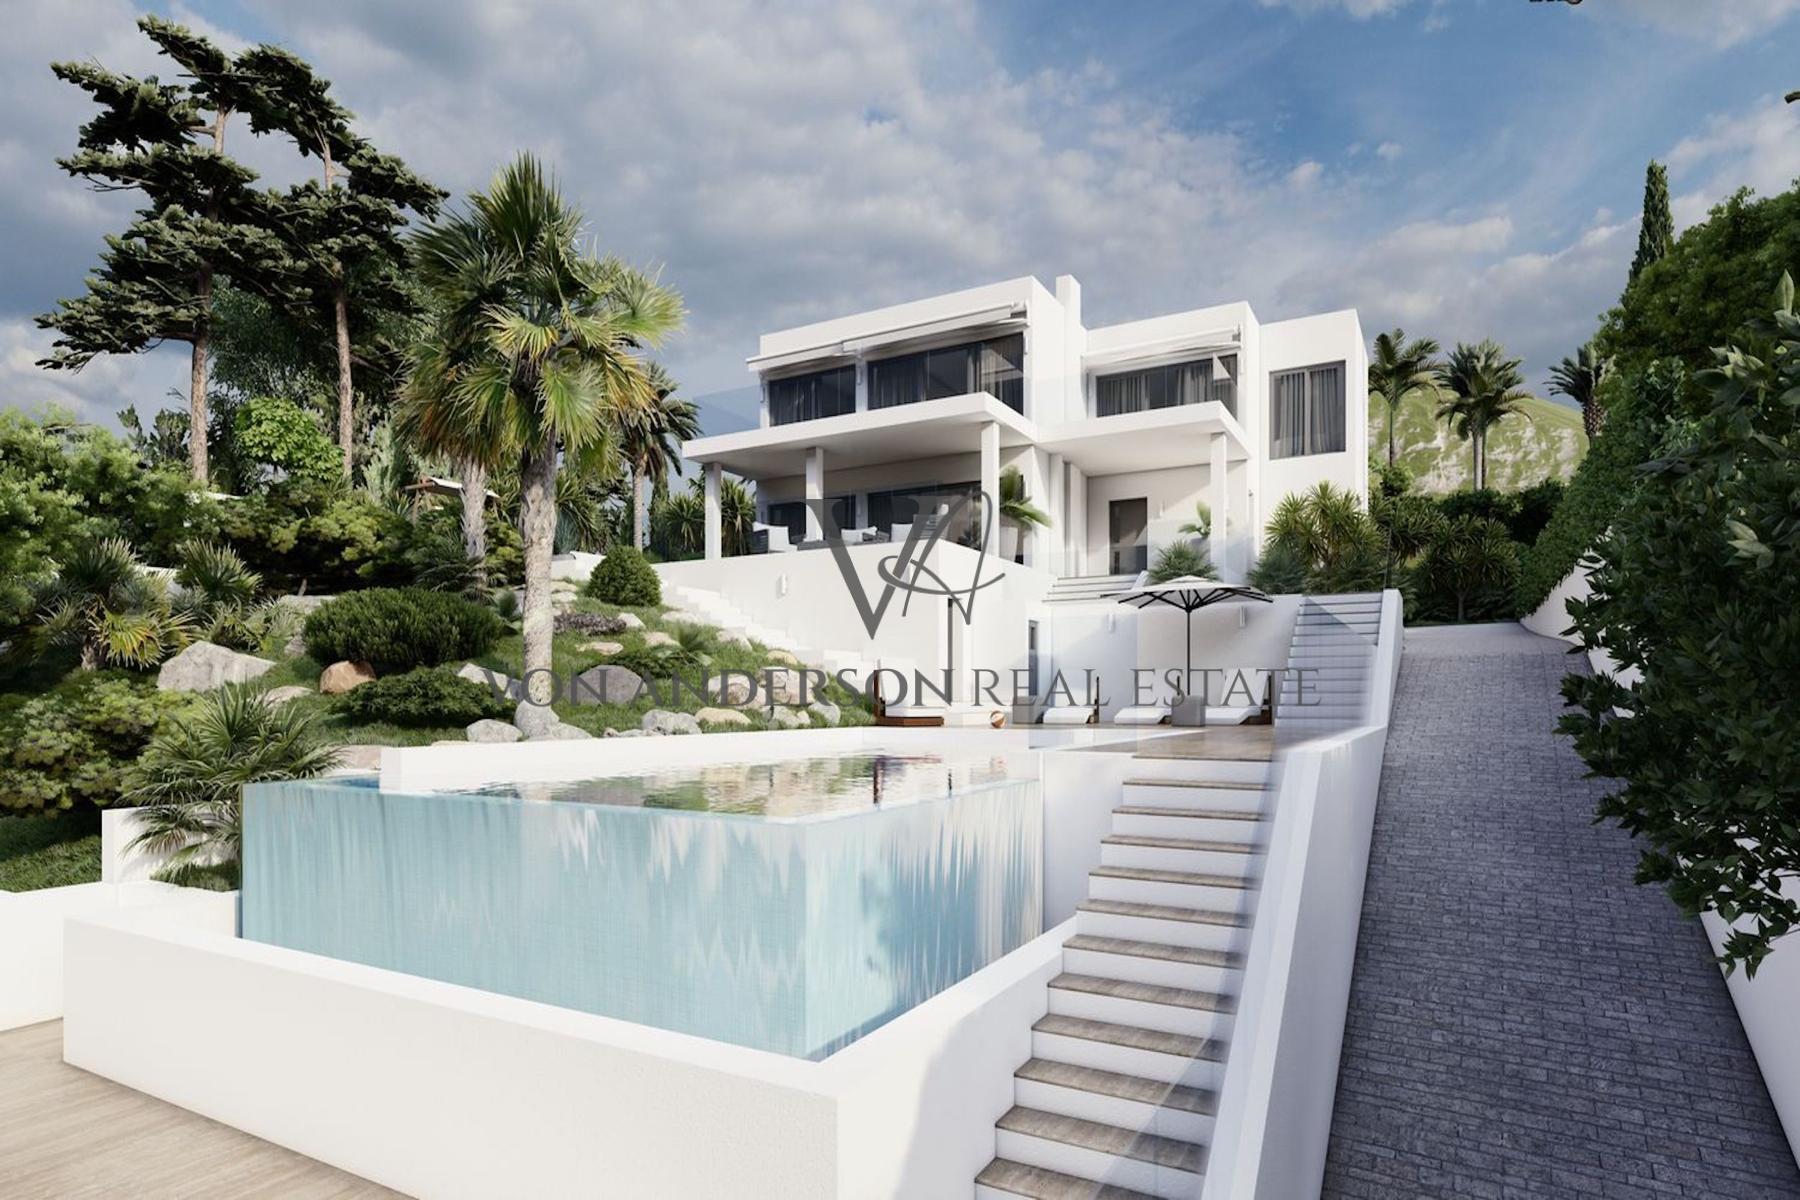 A Beautifully Refurbished Villa in Santa Ponça Featuring Super Ocean Views, ref. VA1016, for sale in Mallorca by Von Anderson Real Estate